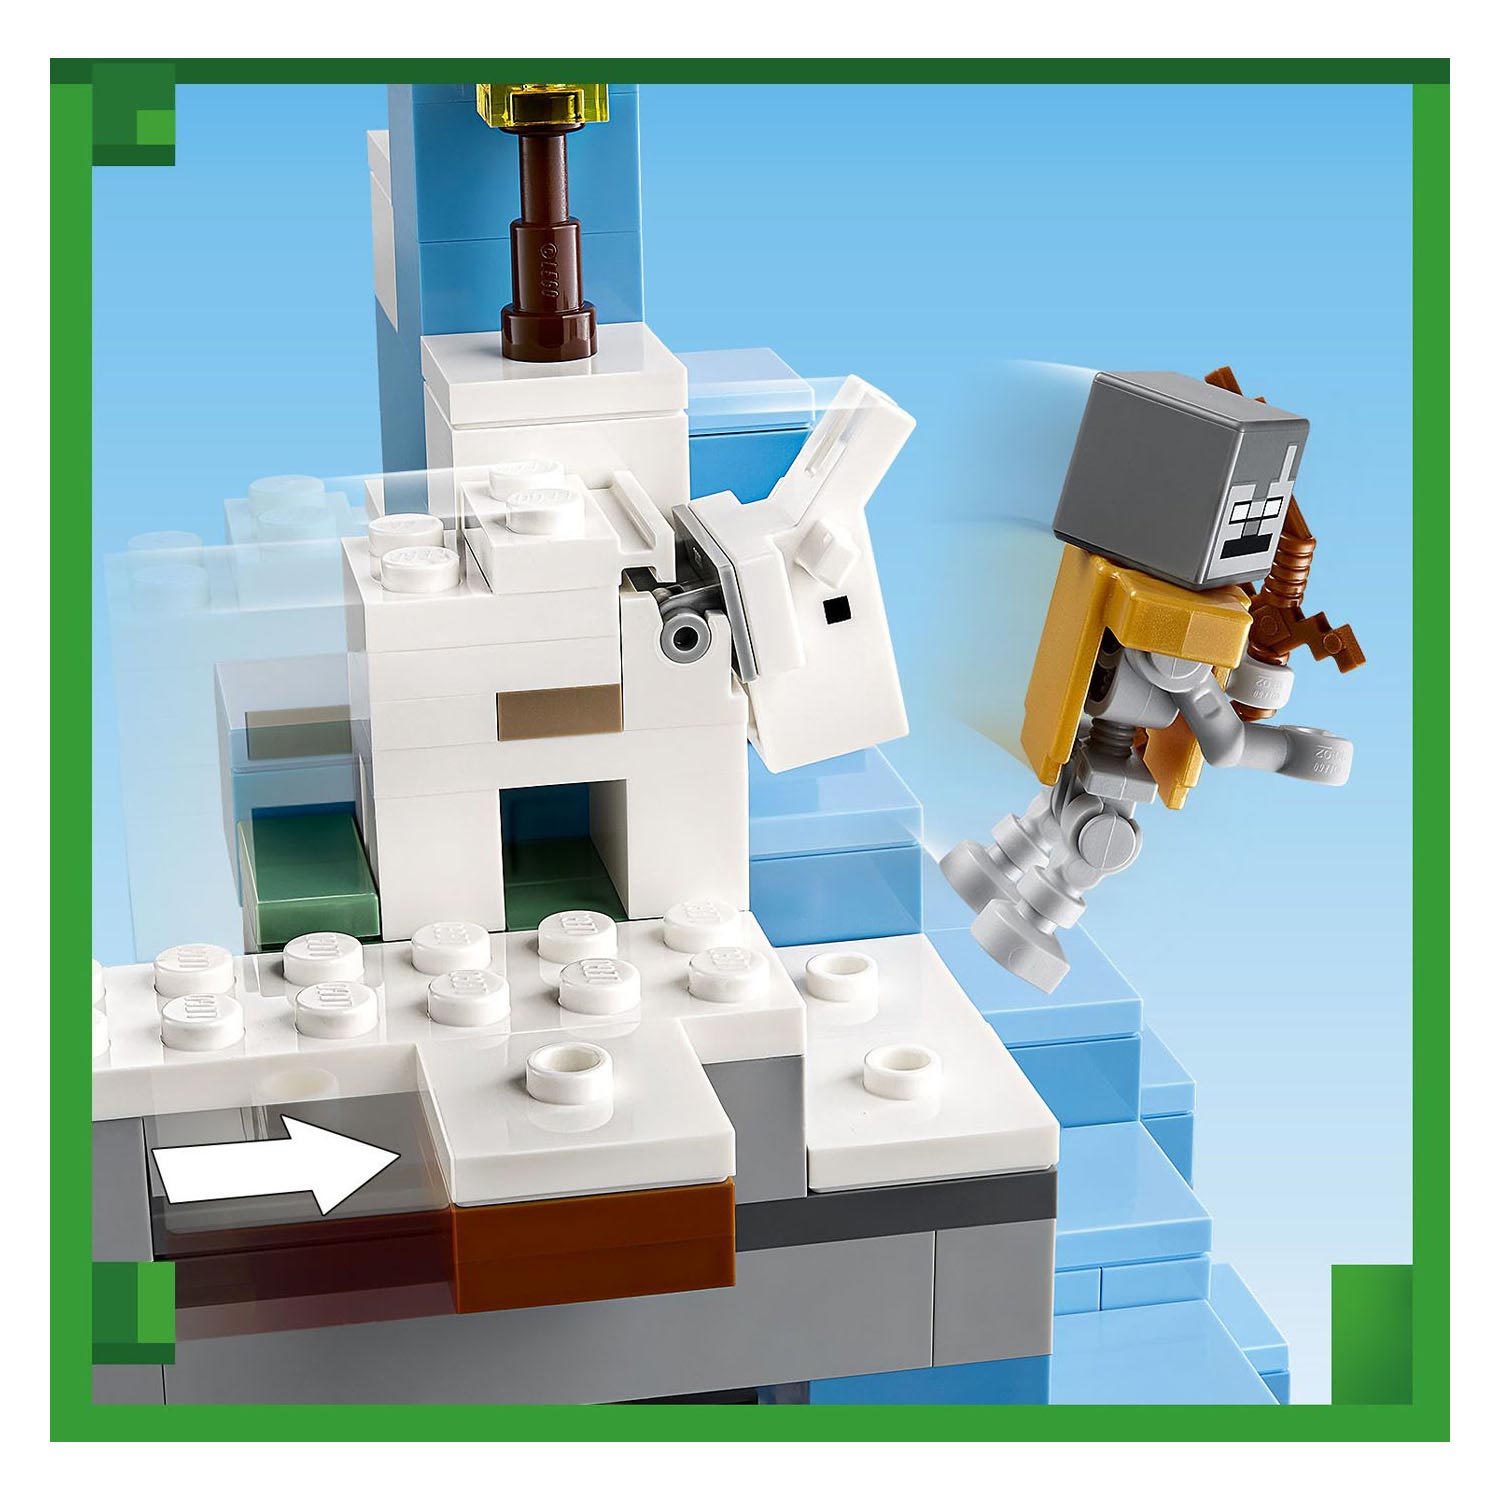 LEGO Minecraft 21243 Les sommets de l'iceberg